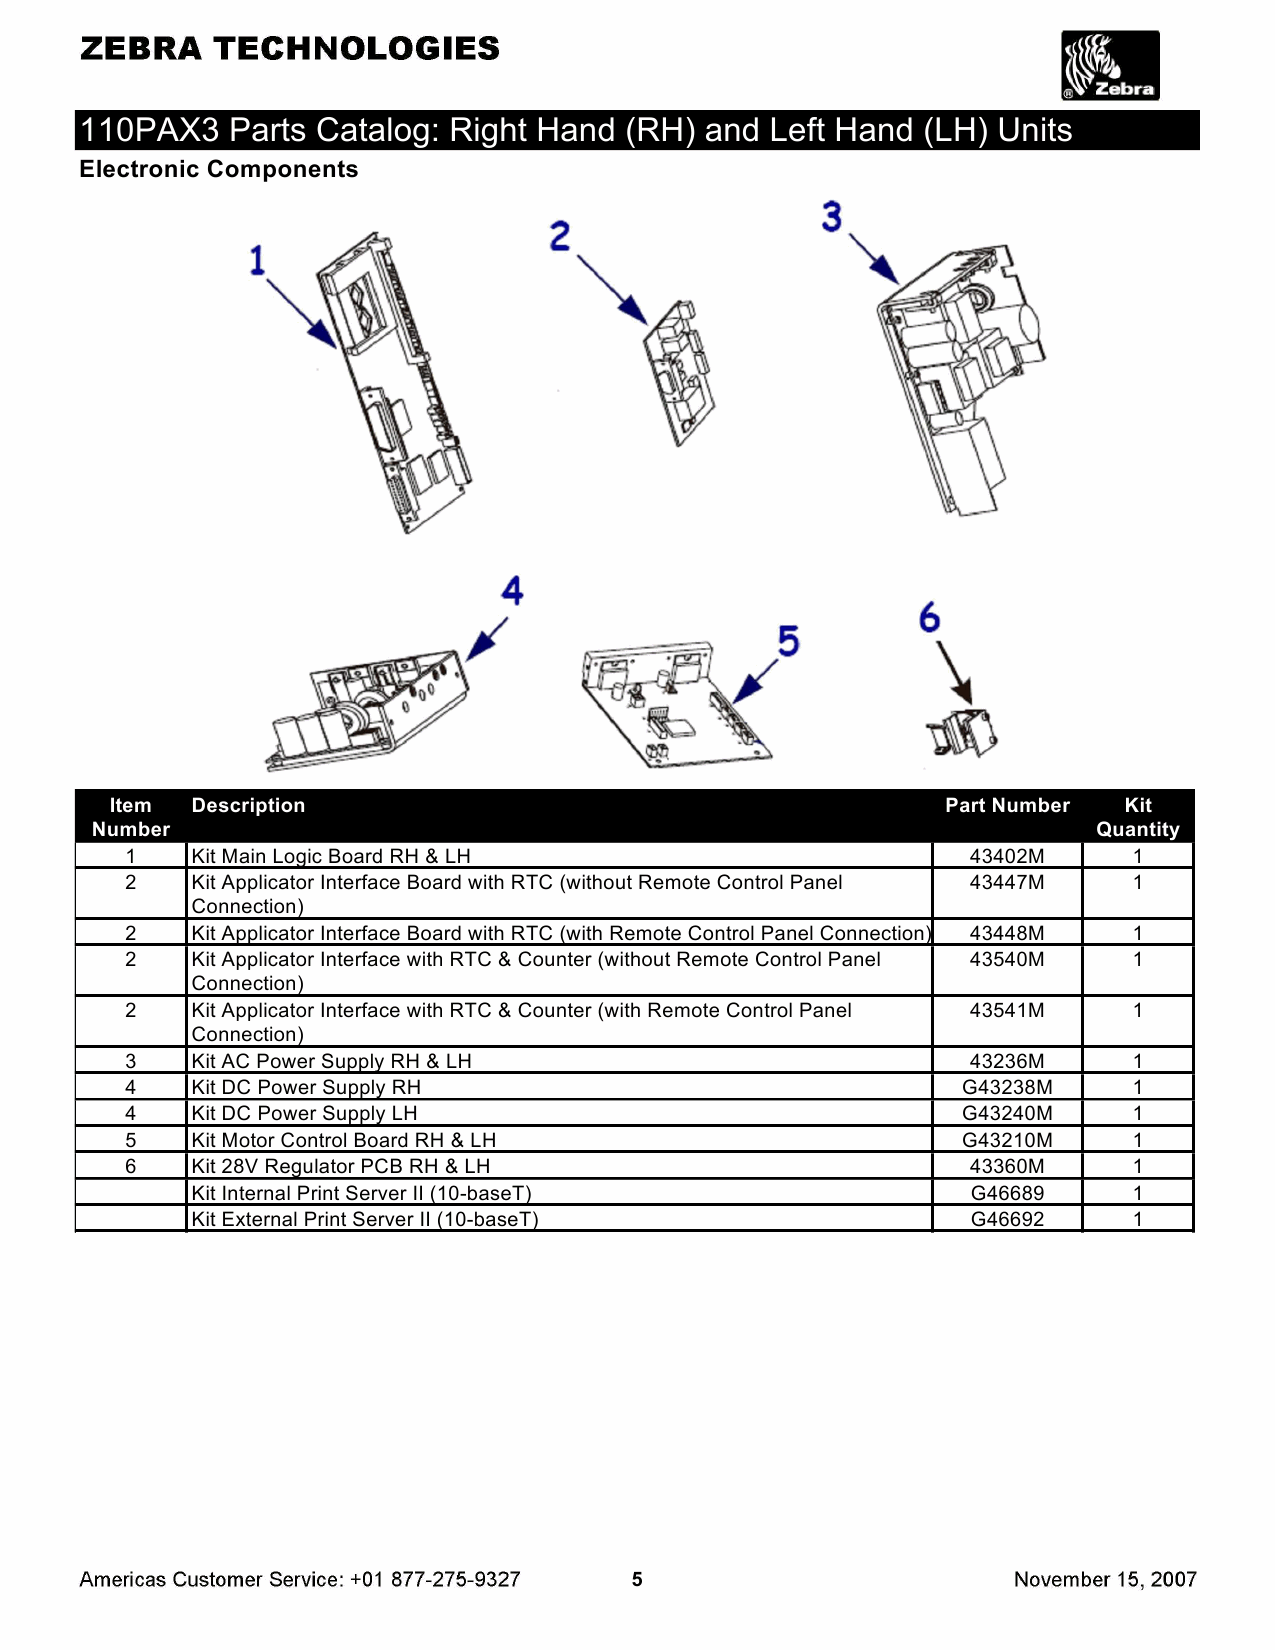 Zebra Label 110PAX3 Parts Catalog-4